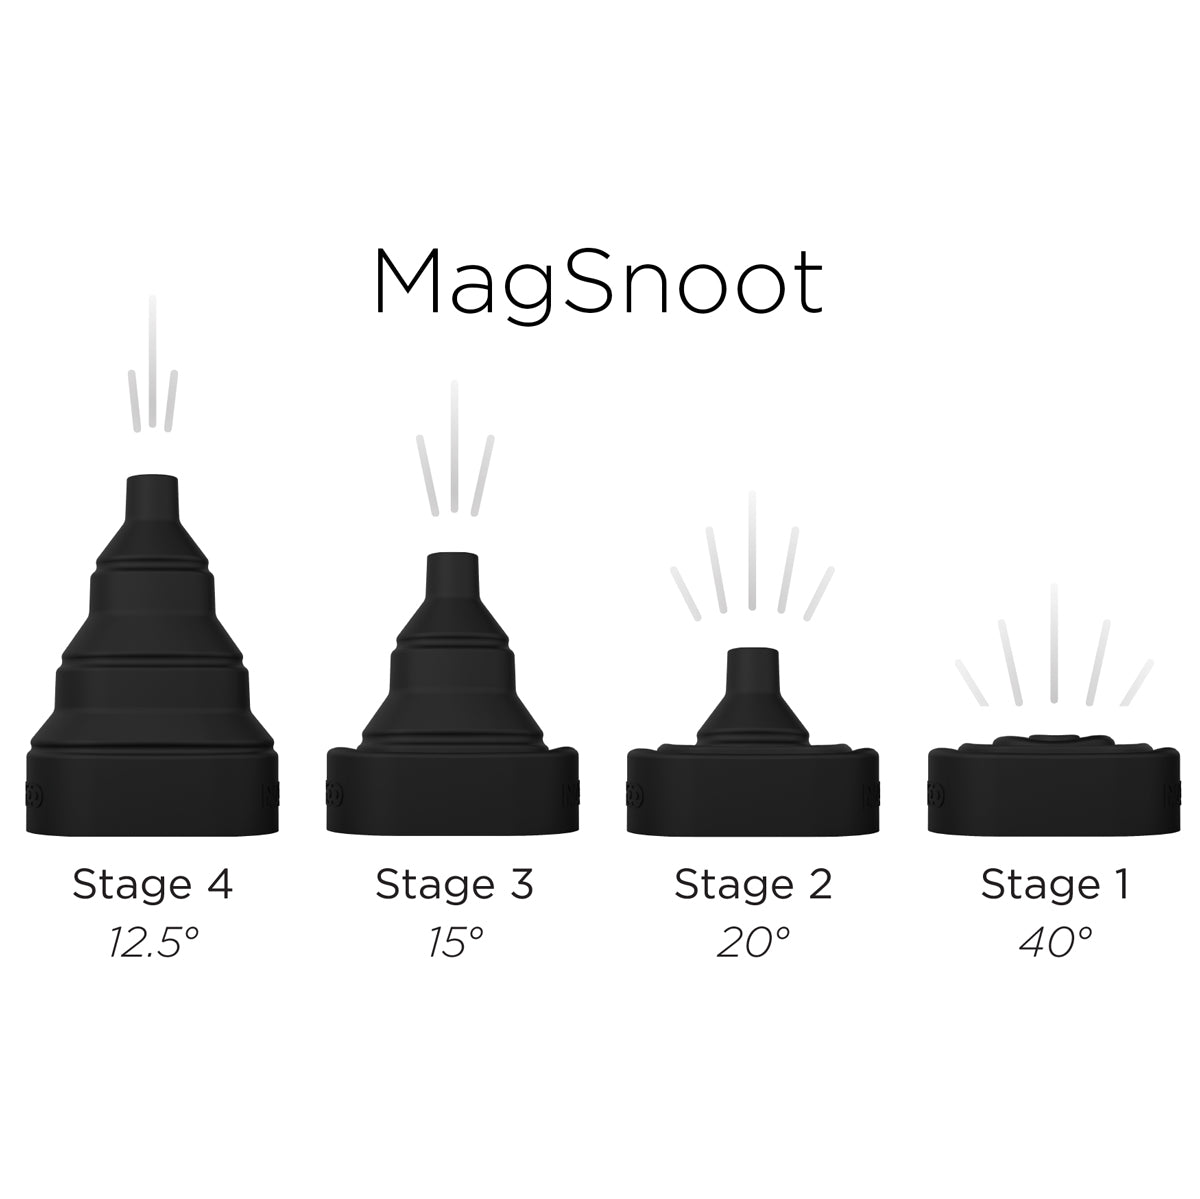 MagMod MagSnoot 2